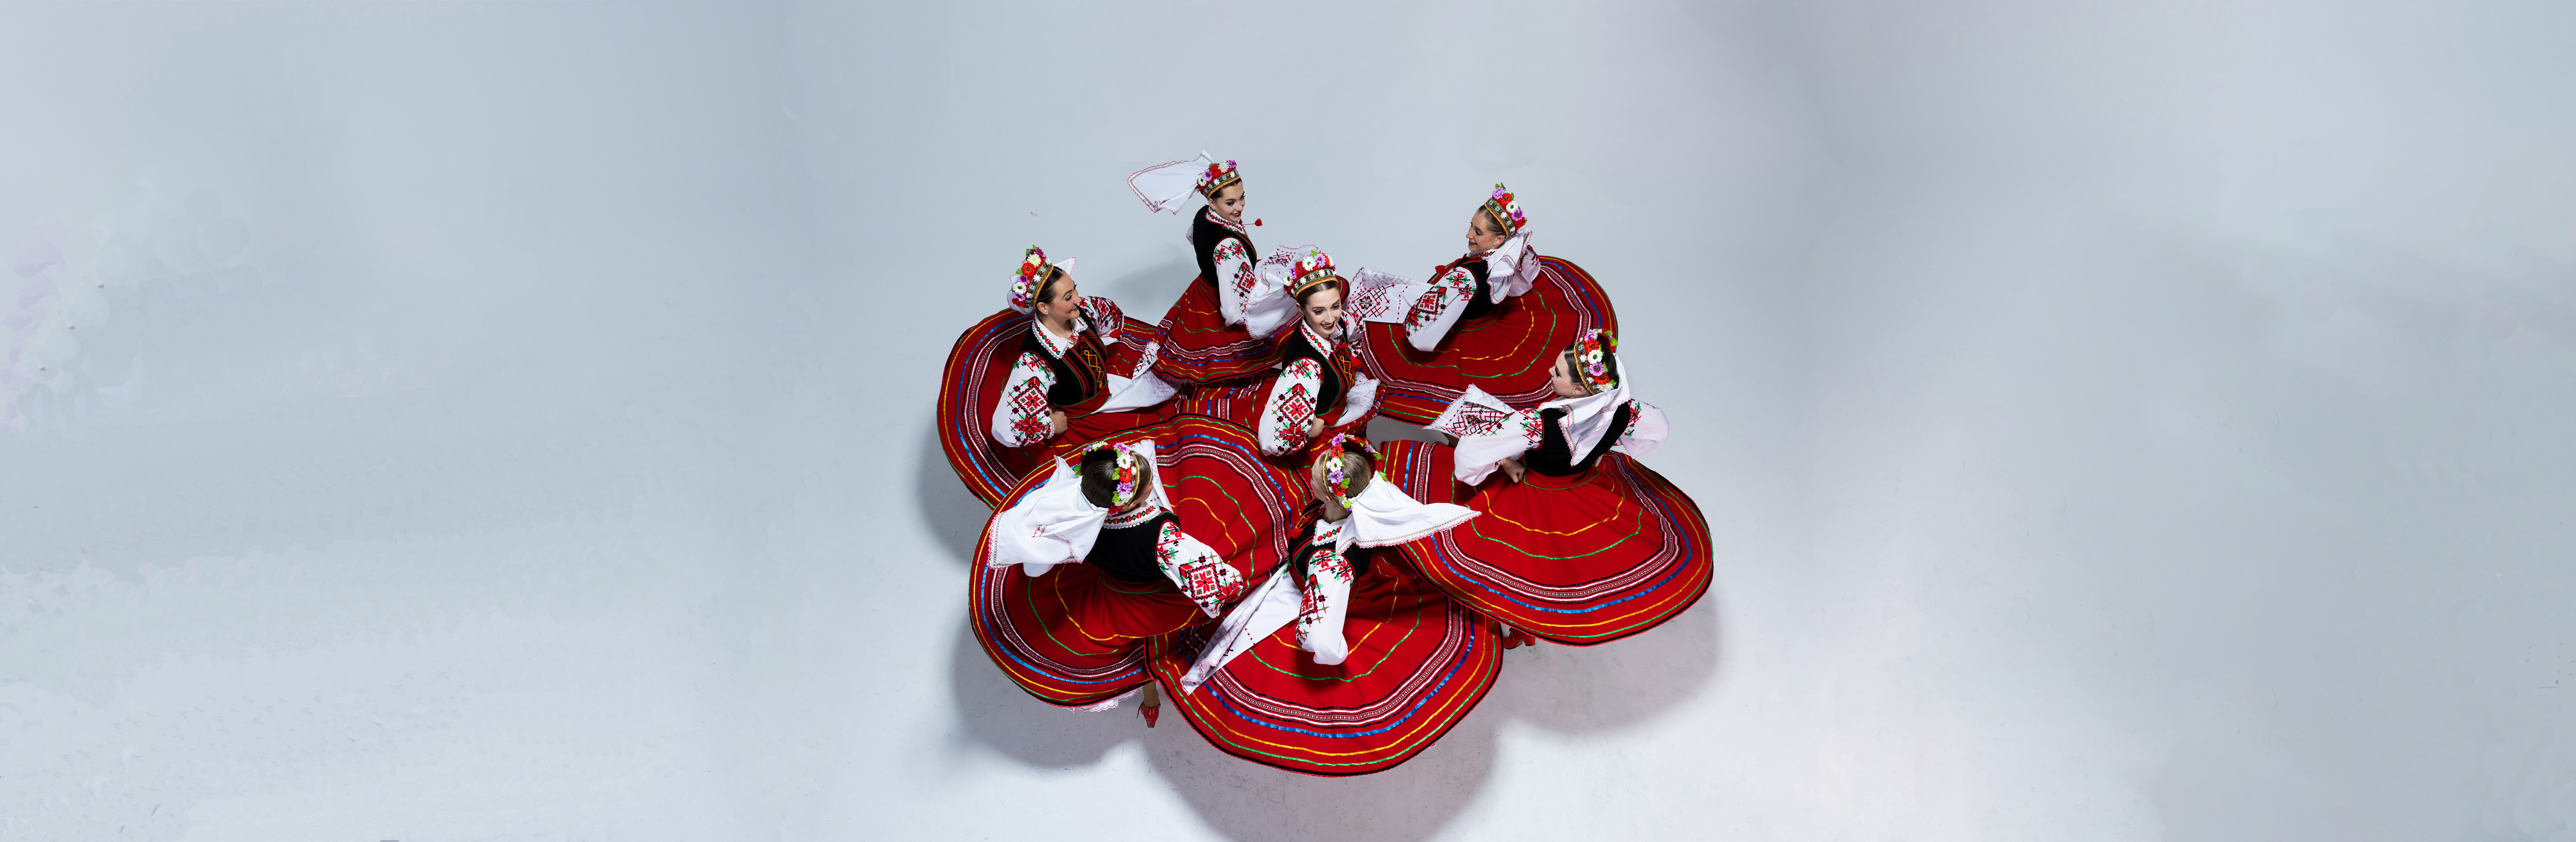 International Folk Dance Ensemble